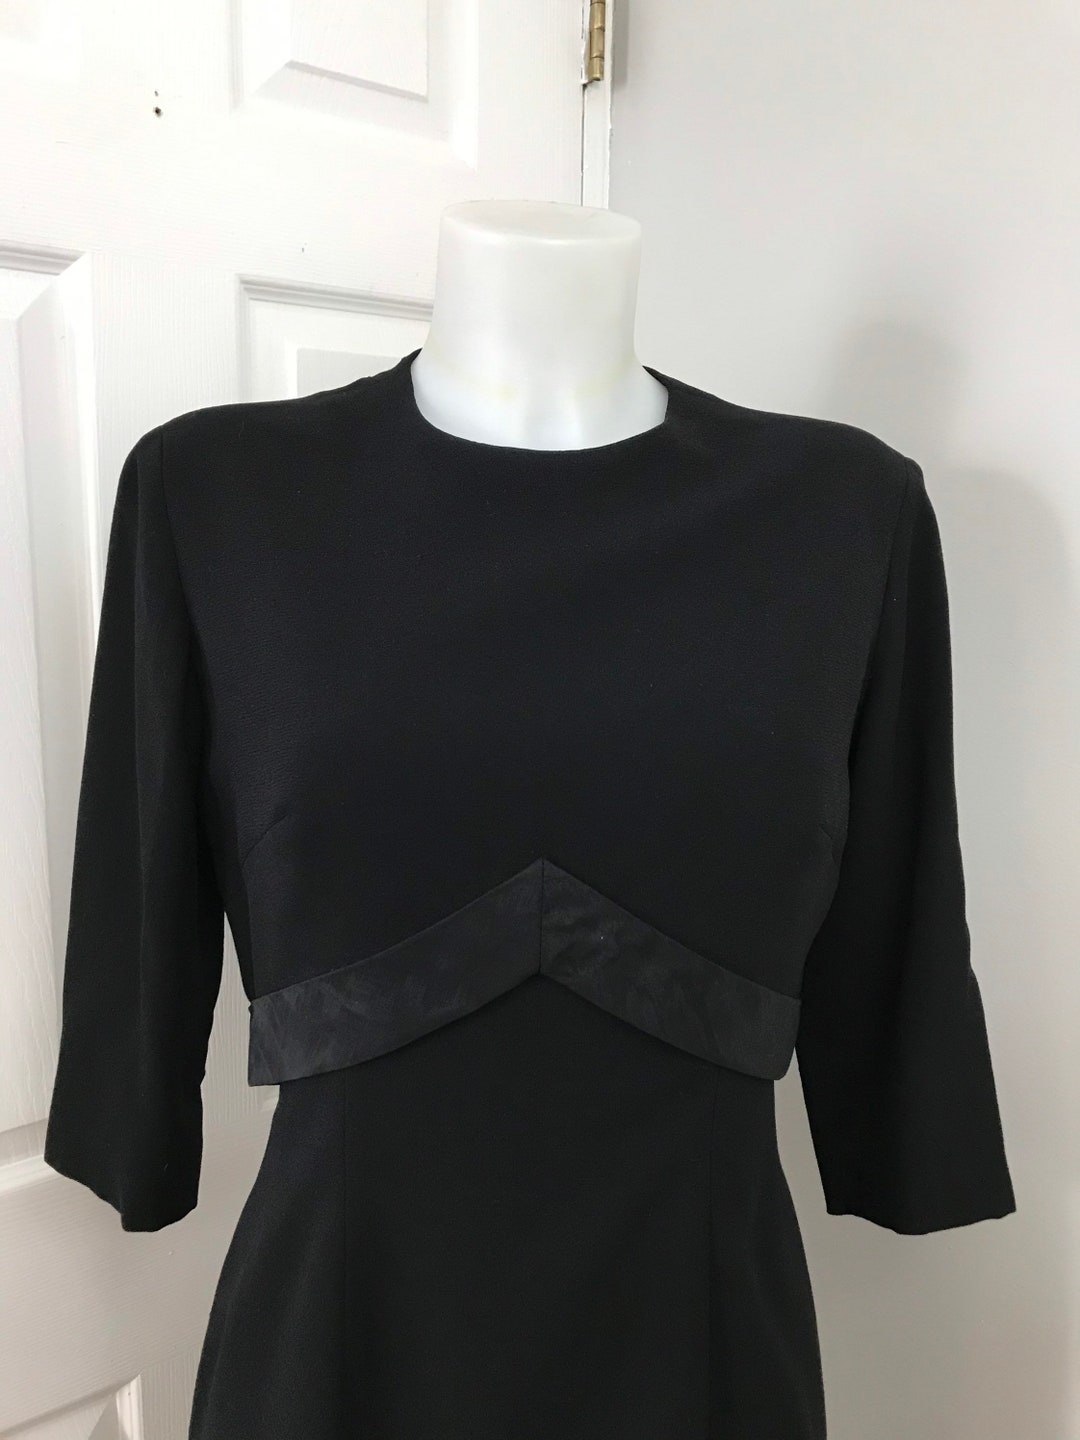 Vintage Black Layered Wiggle Dress - Etsy